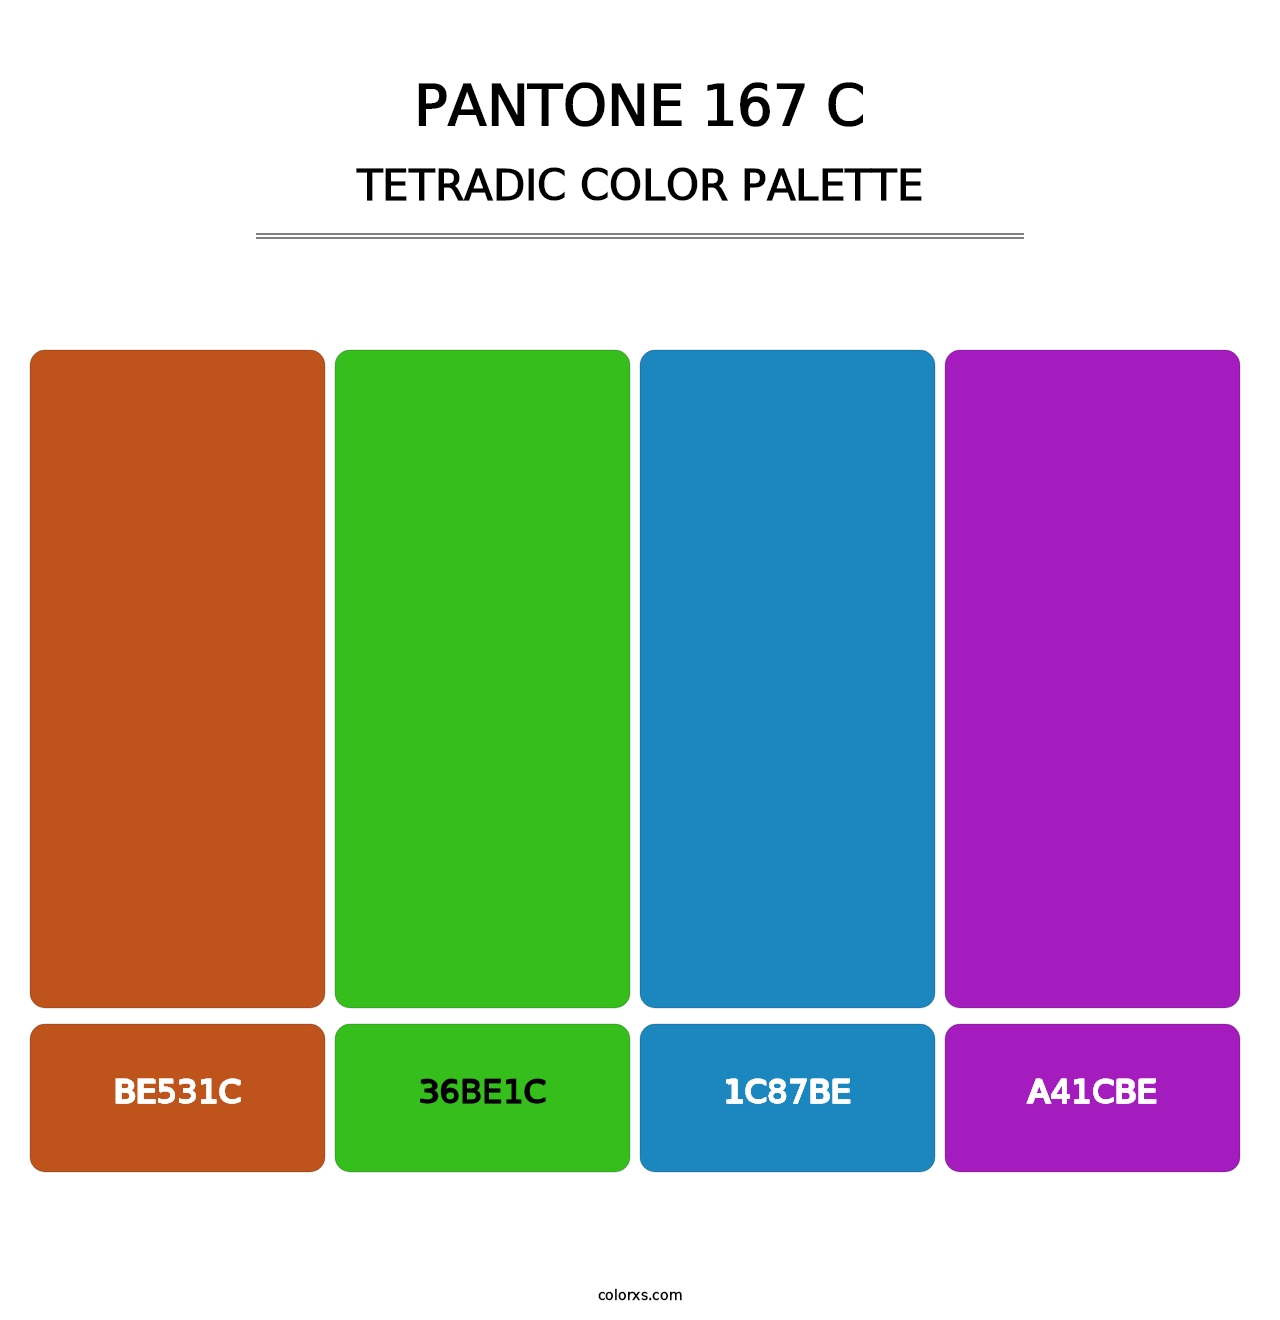 PANTONE 167 C - Tetradic Color Palette